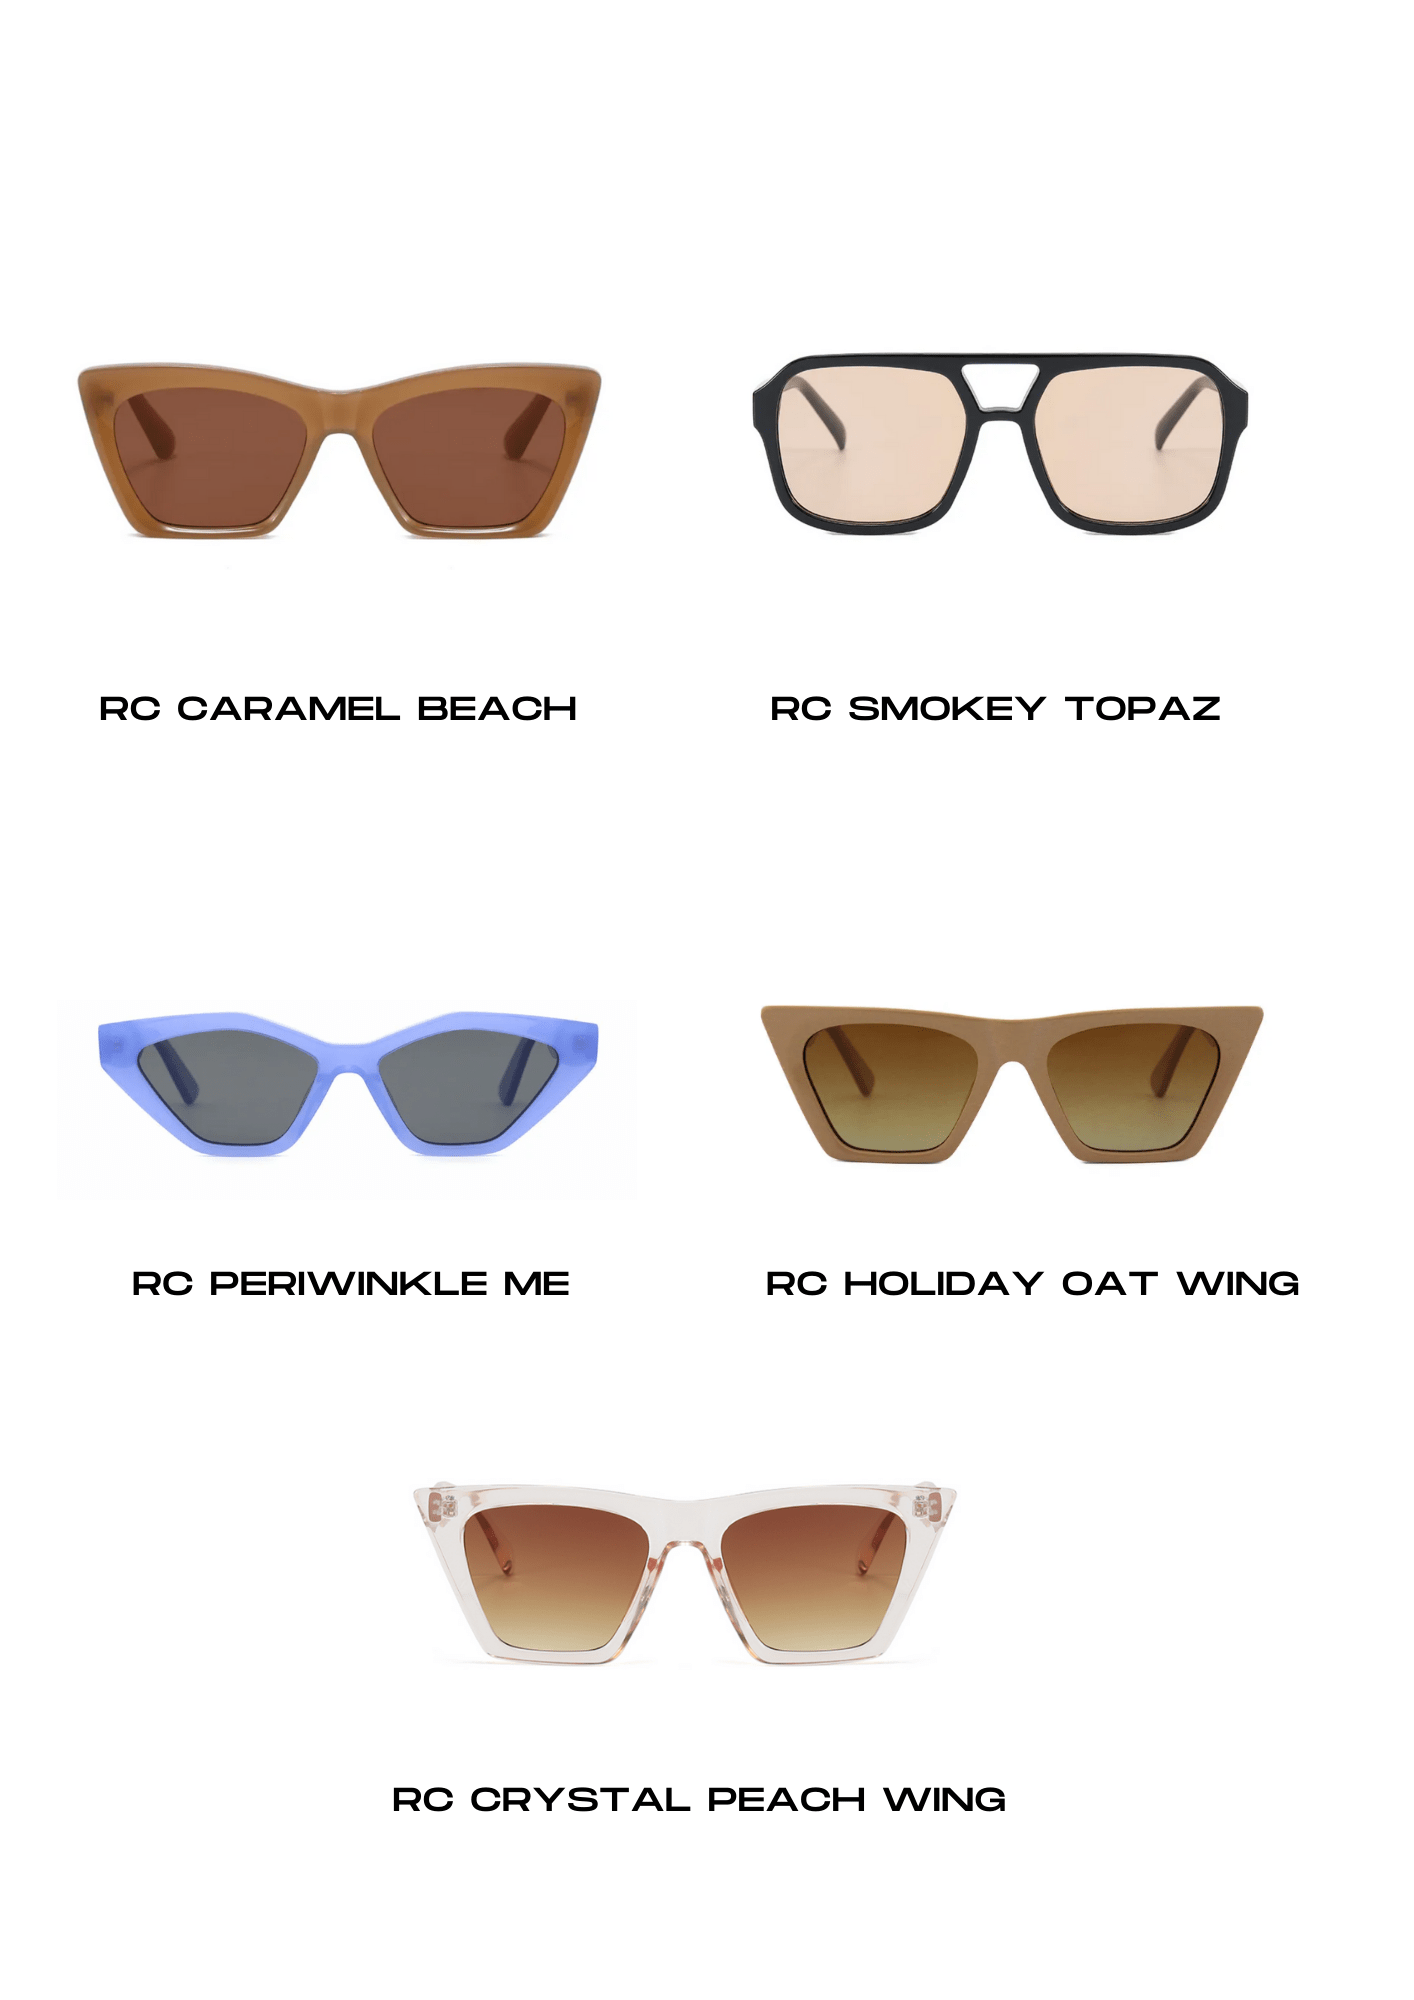 RC Caramel Beach Sunglasses